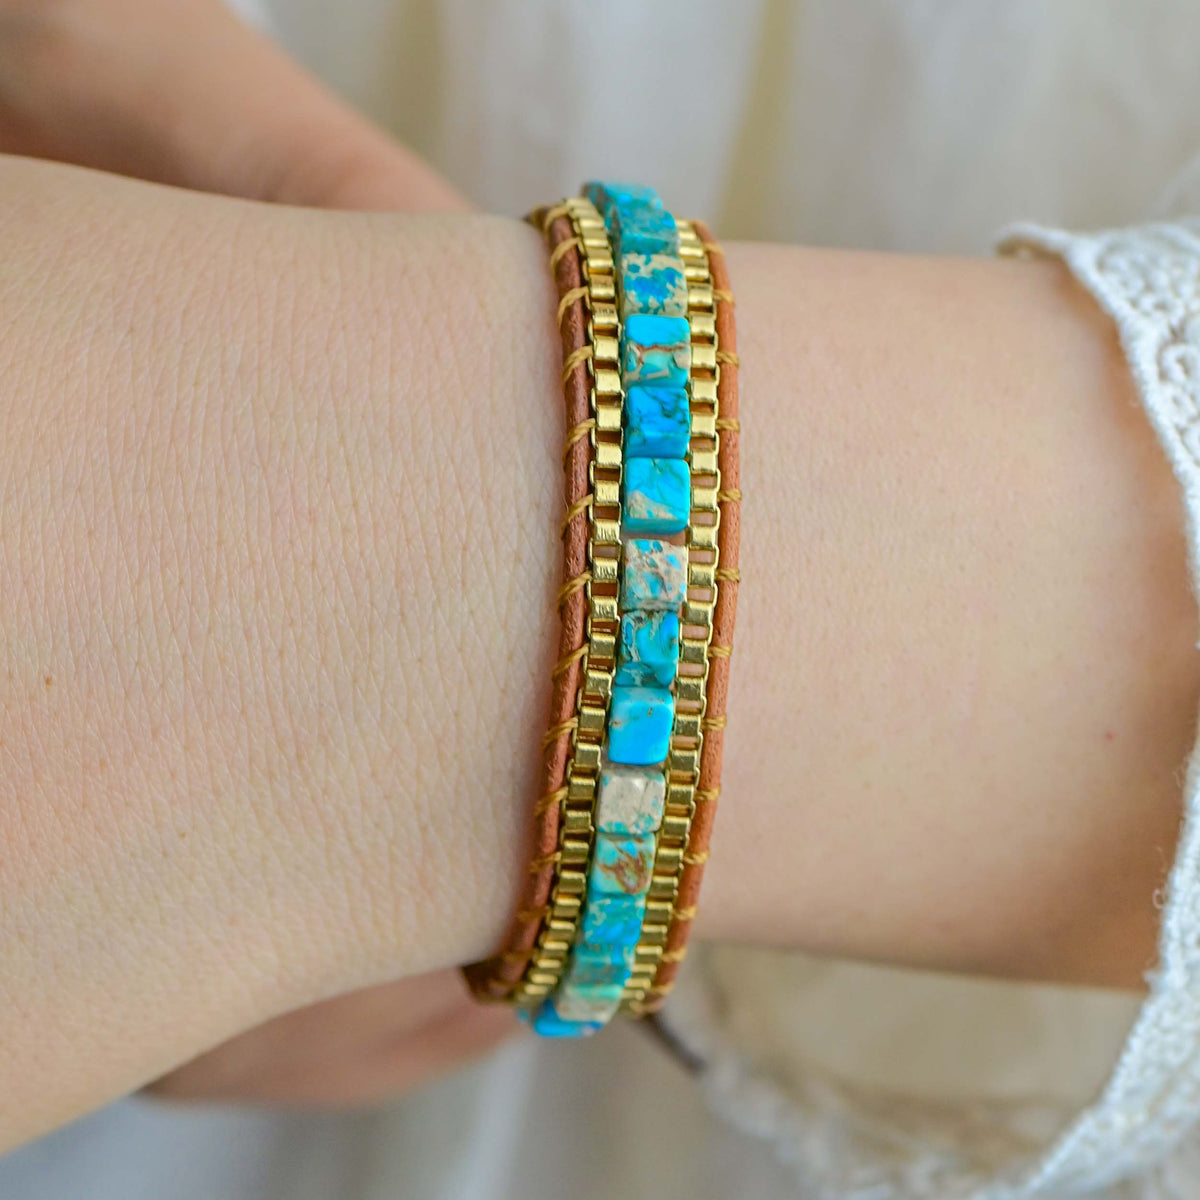 Turquoise Golden Warrior Bracelet - Wrap Bracelets - Pretland | Spiritual Crystals & Jewelry